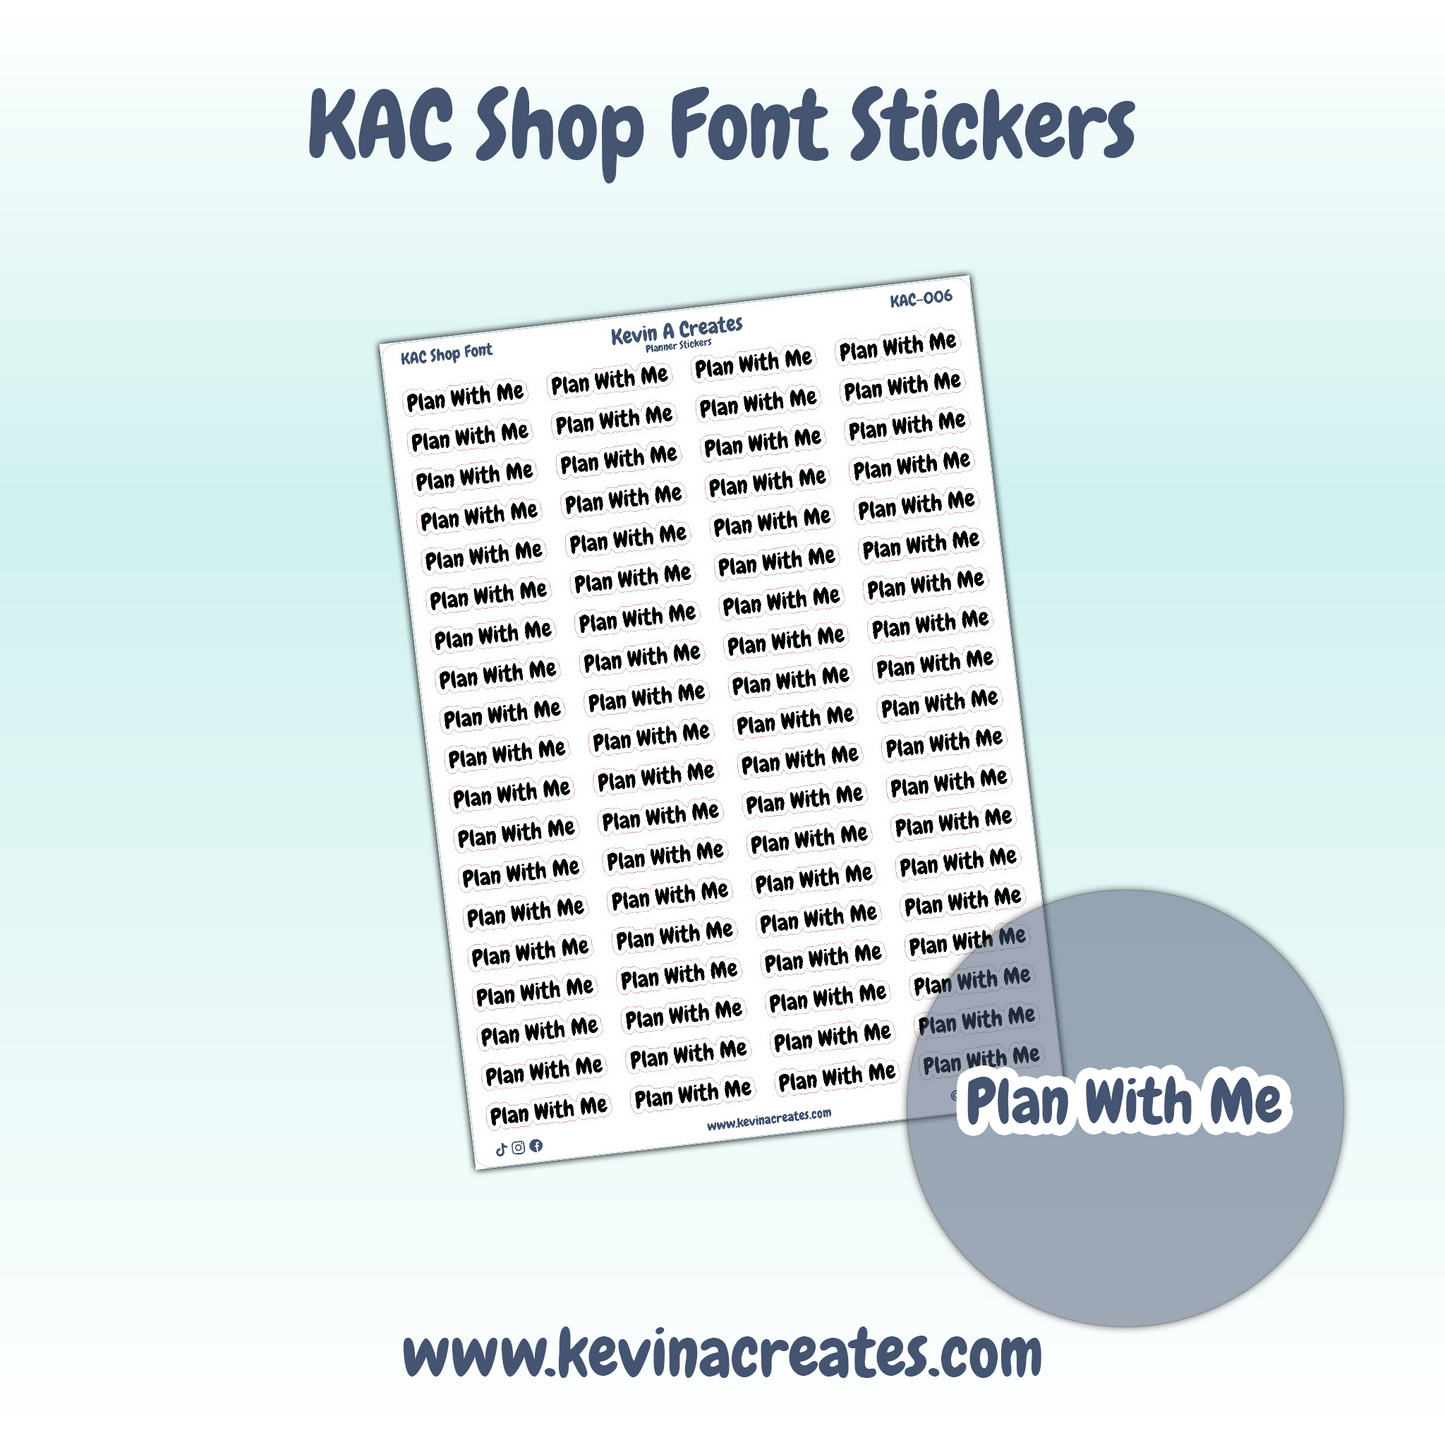 KAC-006, PLAN WITH ME, Kevin A Creates Shop Font, Script Planner Stickers